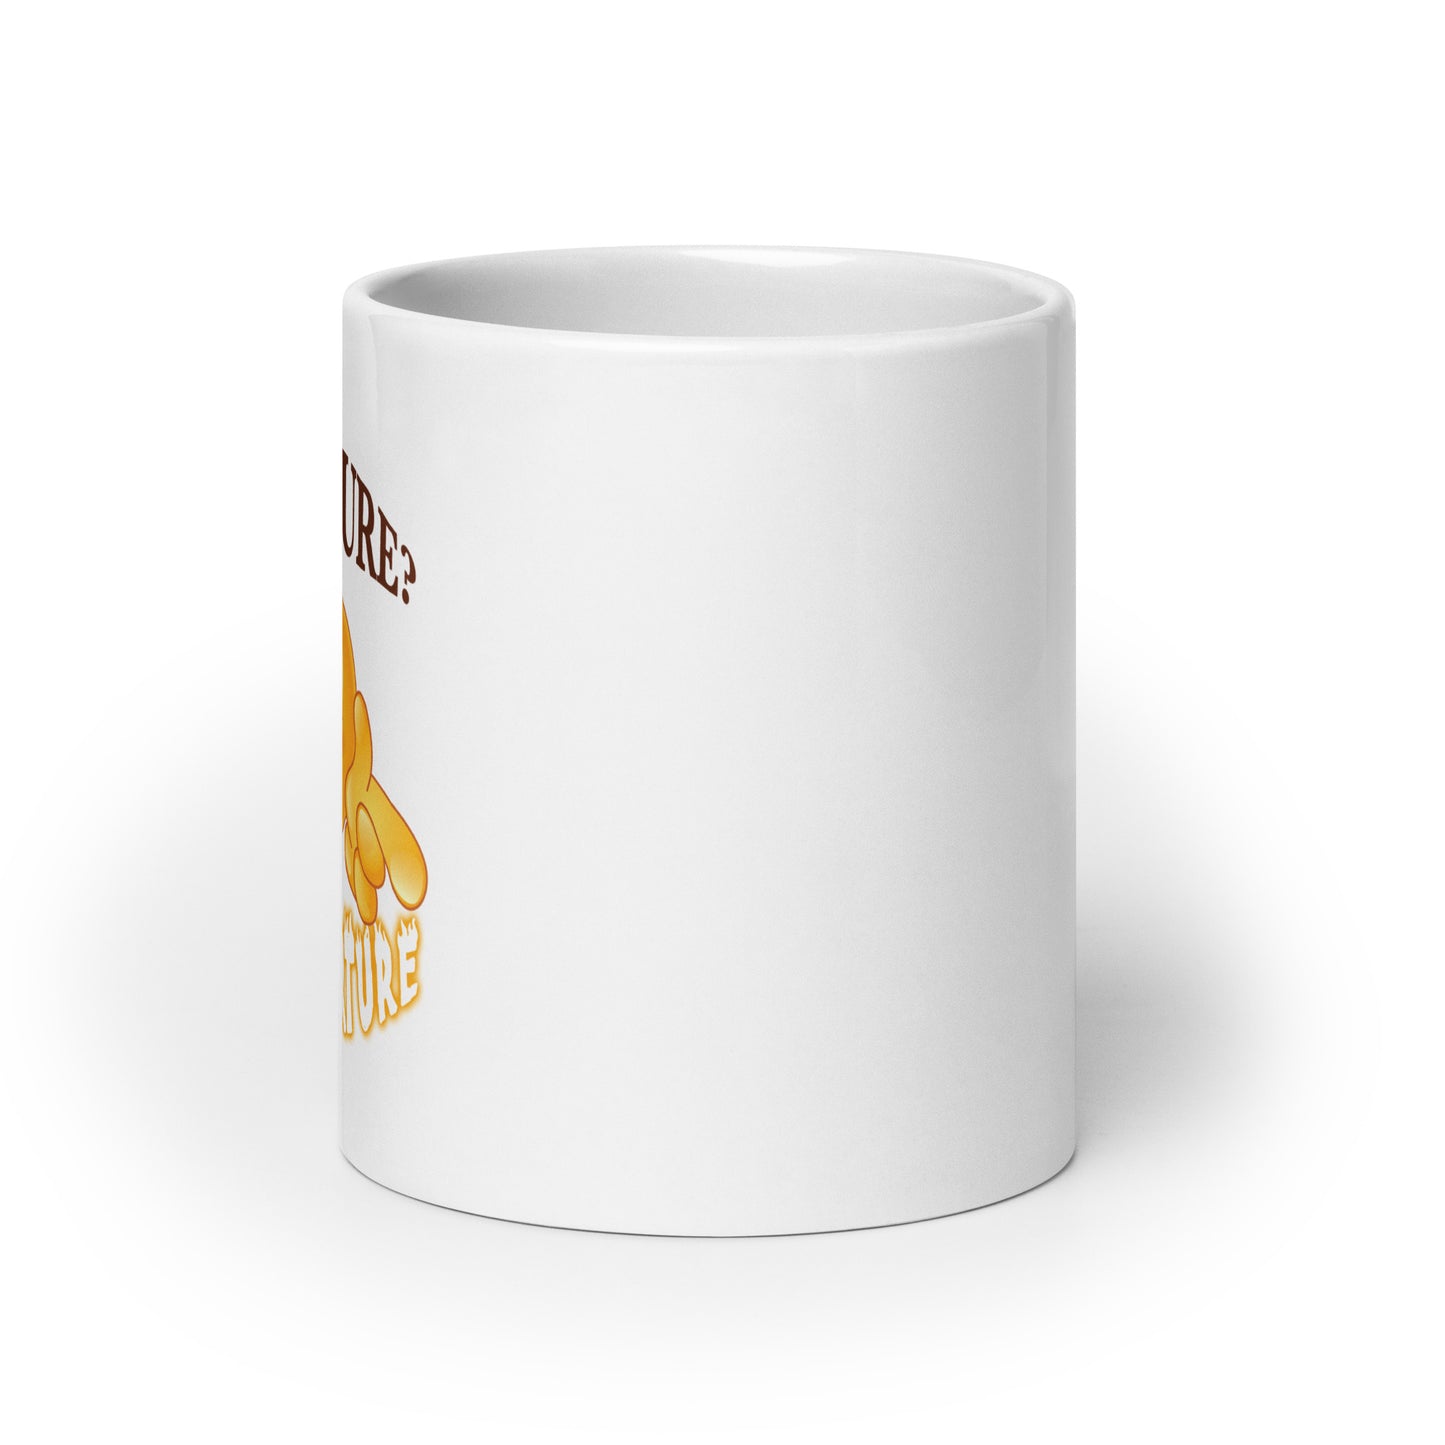 Architecture (Architorture) mug